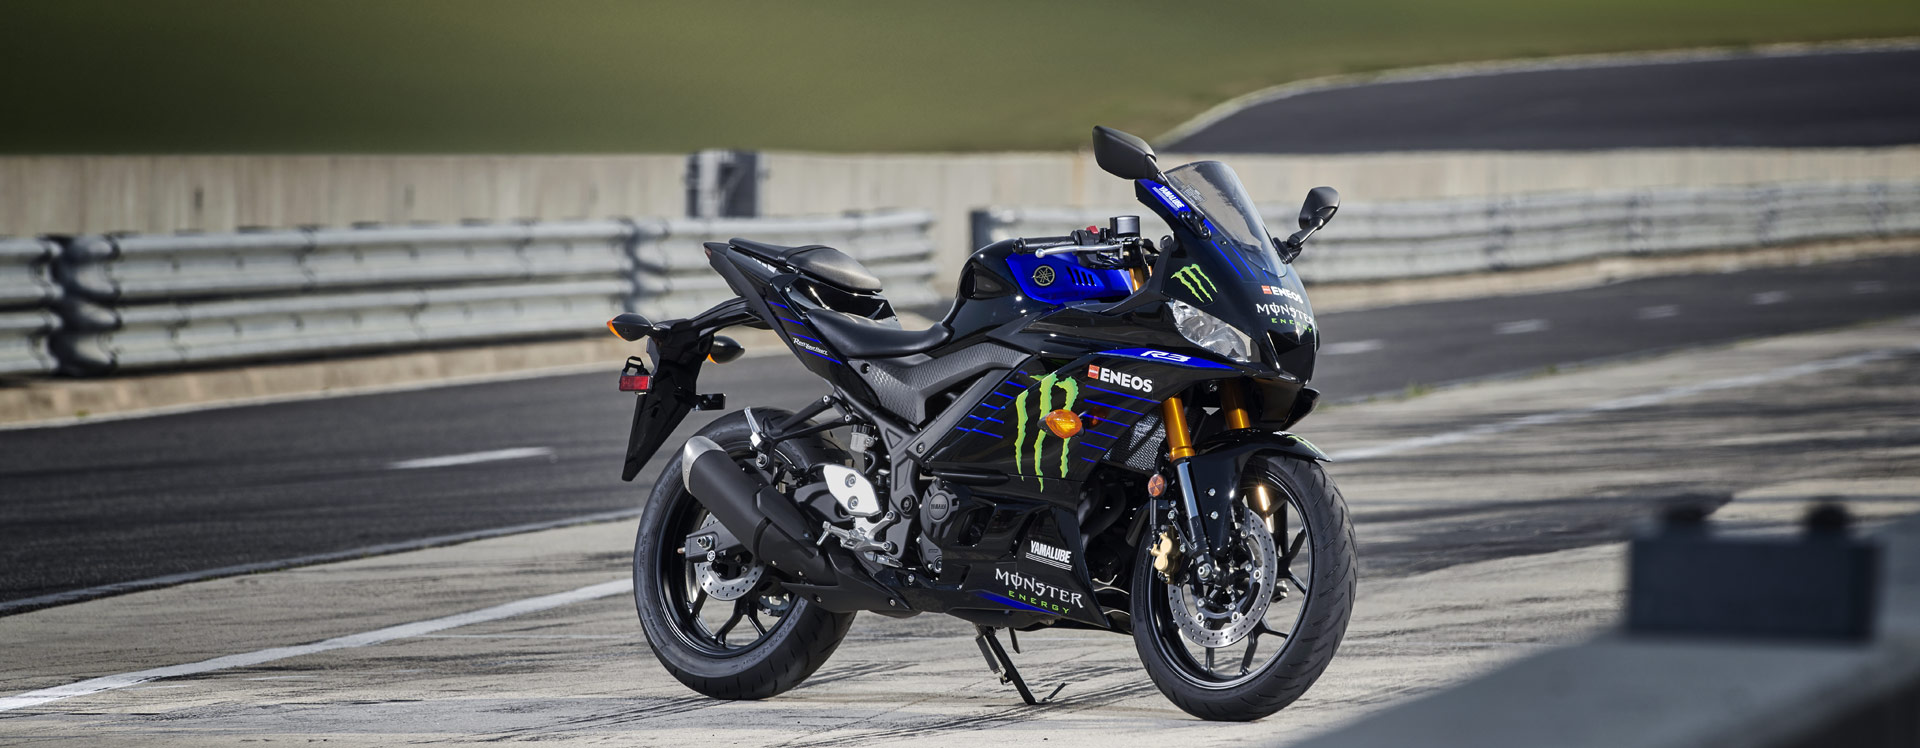 2021 Yamaha Yzf-R3-Motogp